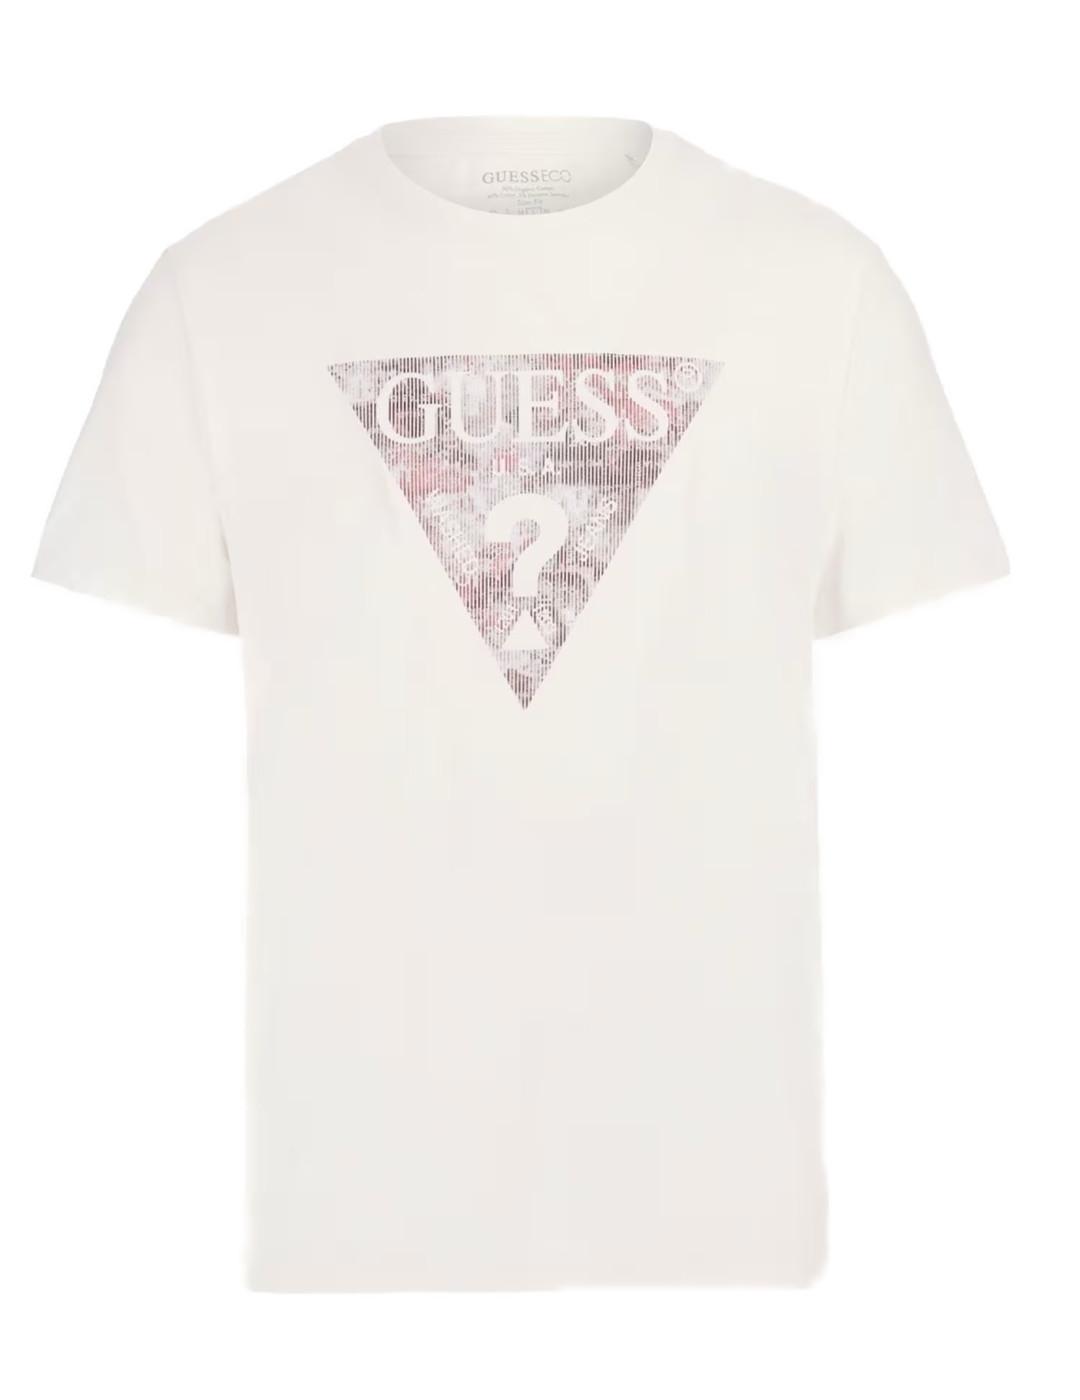 Camiseta Guess Triangle blanco manga corta para hombre